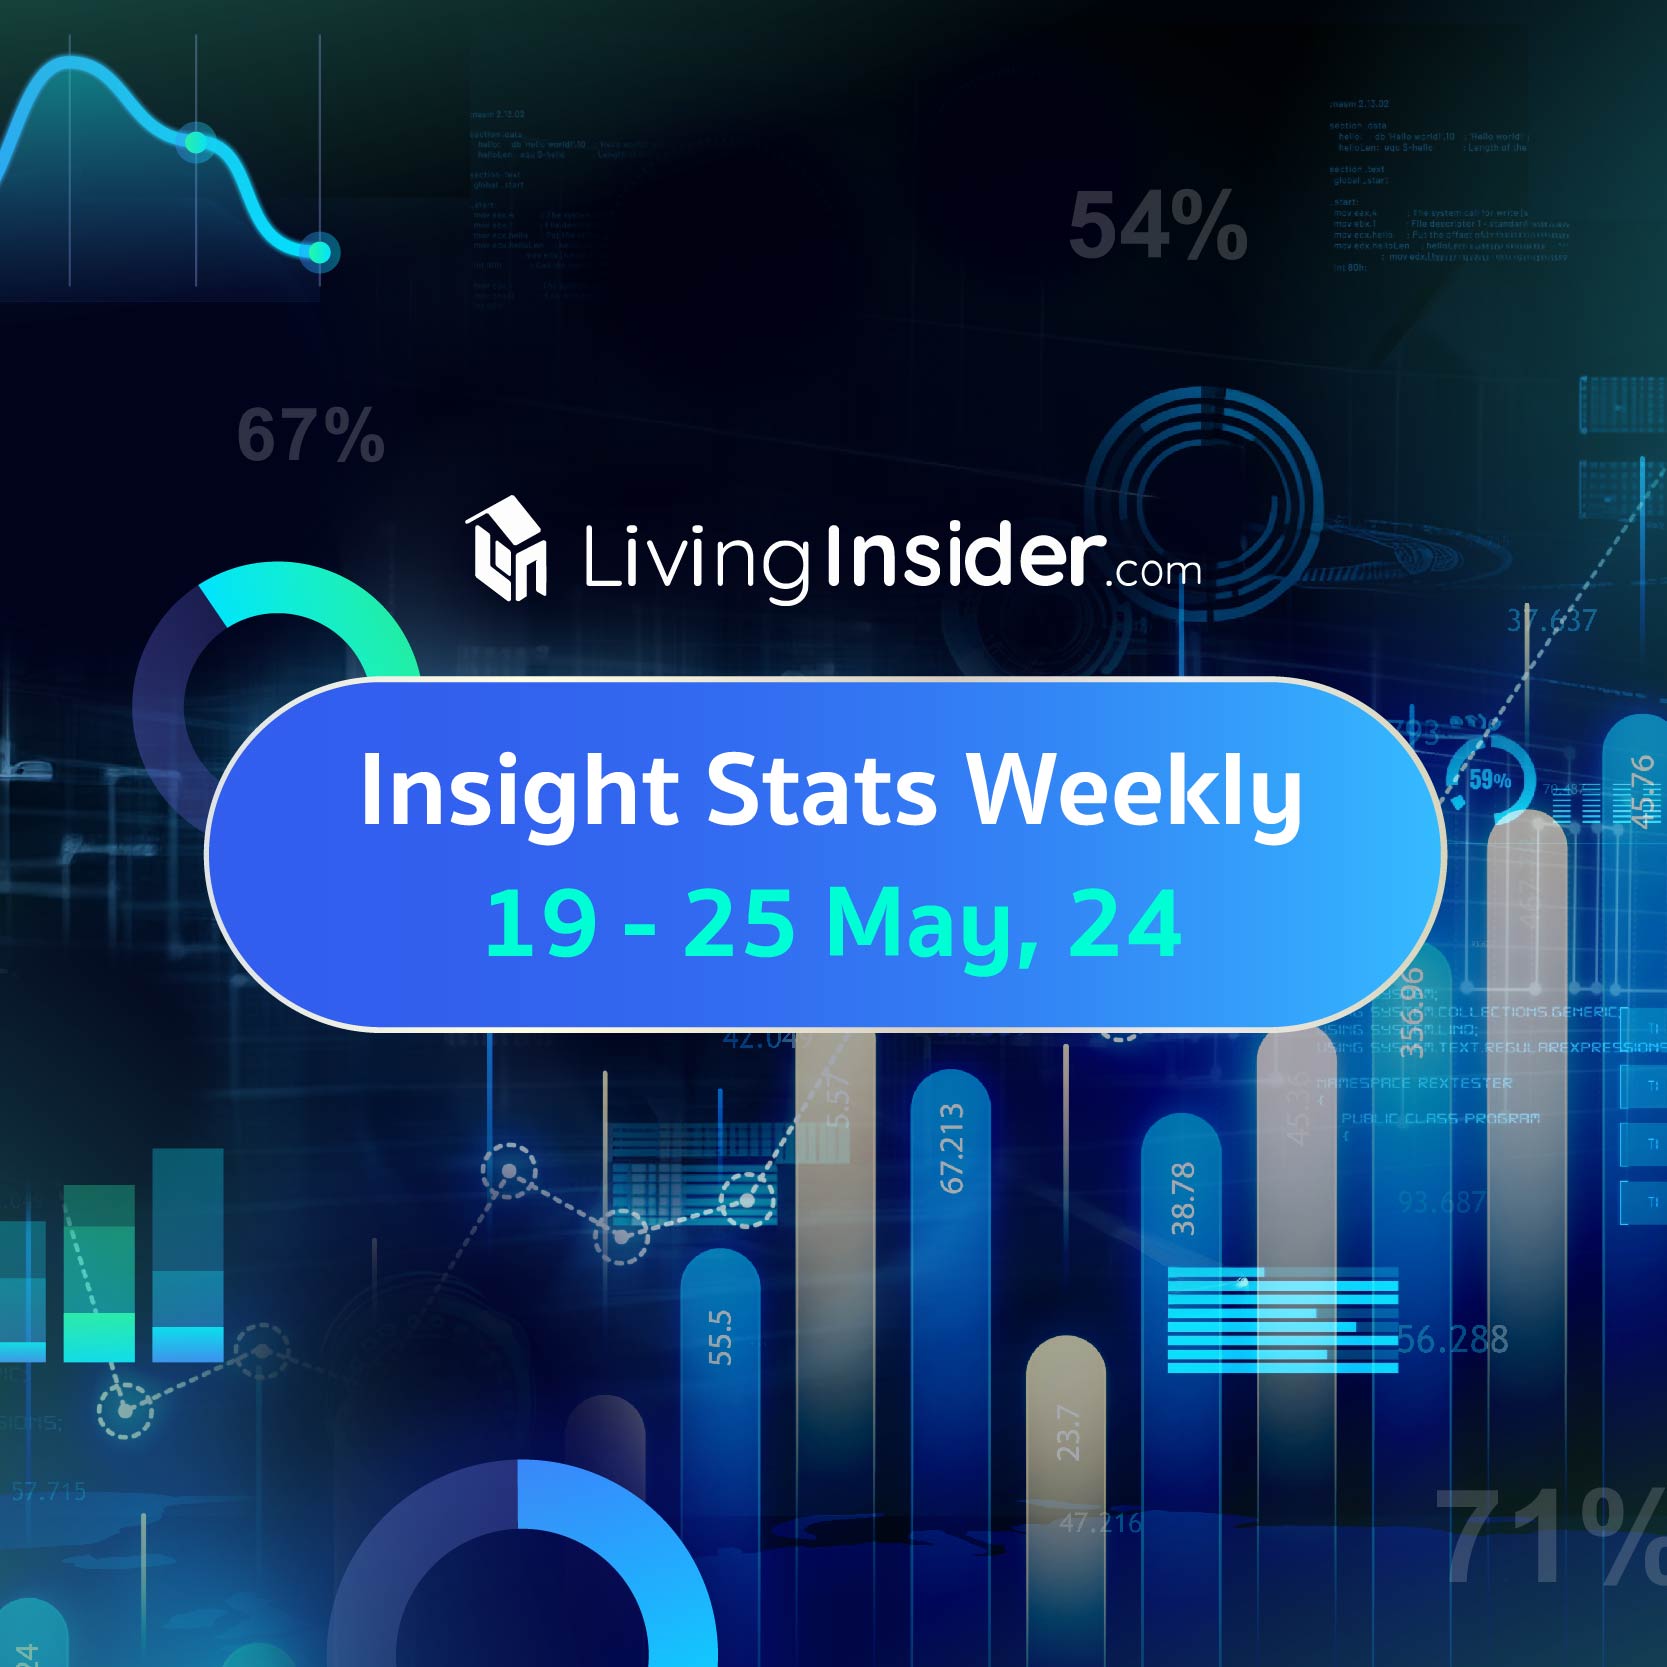 Livinginsider - Weekly Insight Report [11-17 Feb 2024]